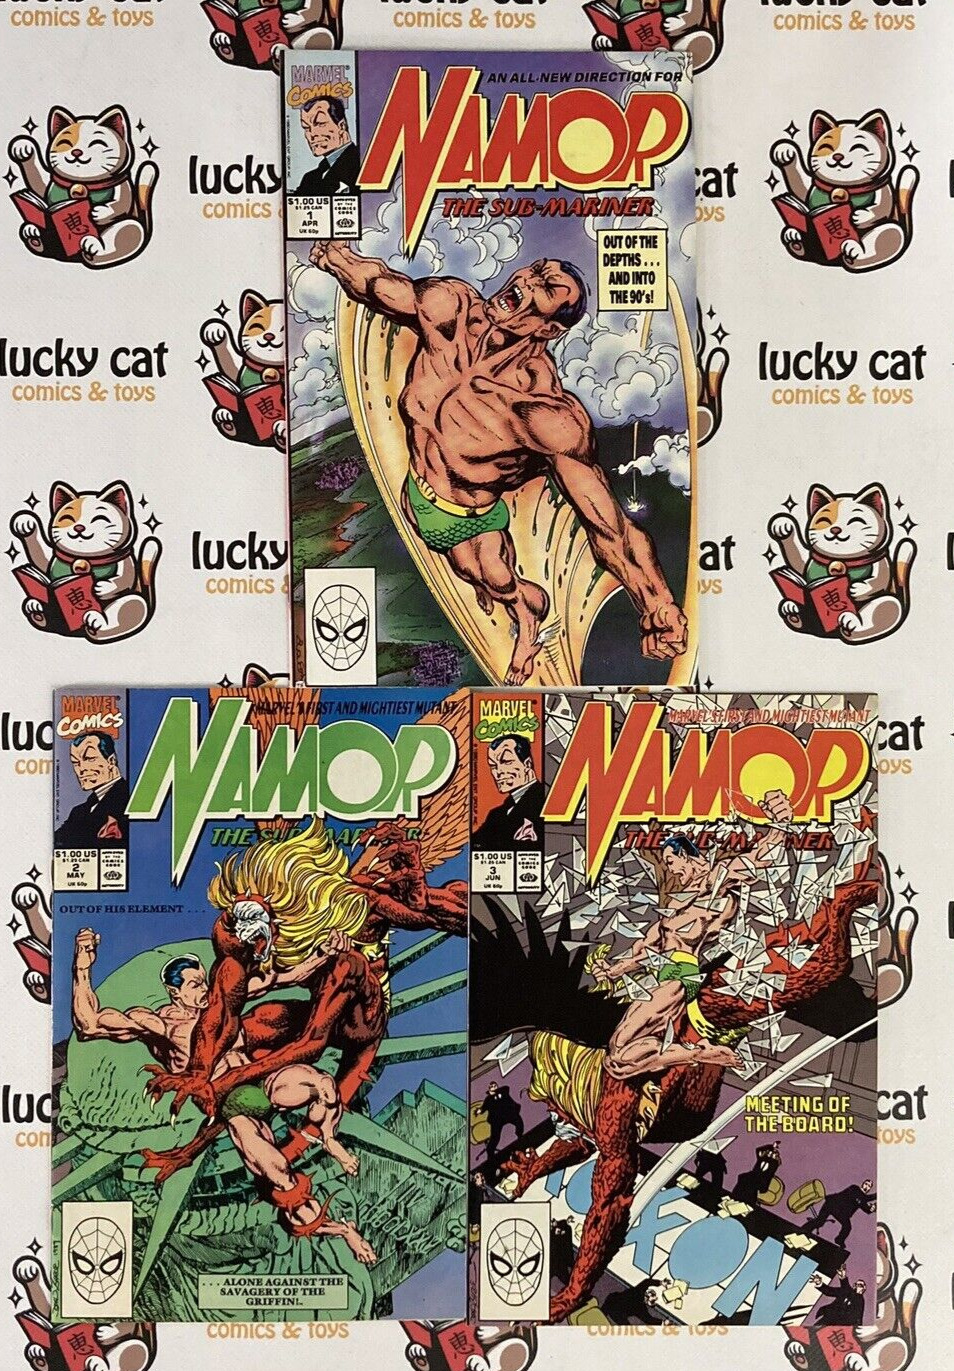 NAMOR THE SUBMARINER #1-62 1990 Marvel Comics Complete Series